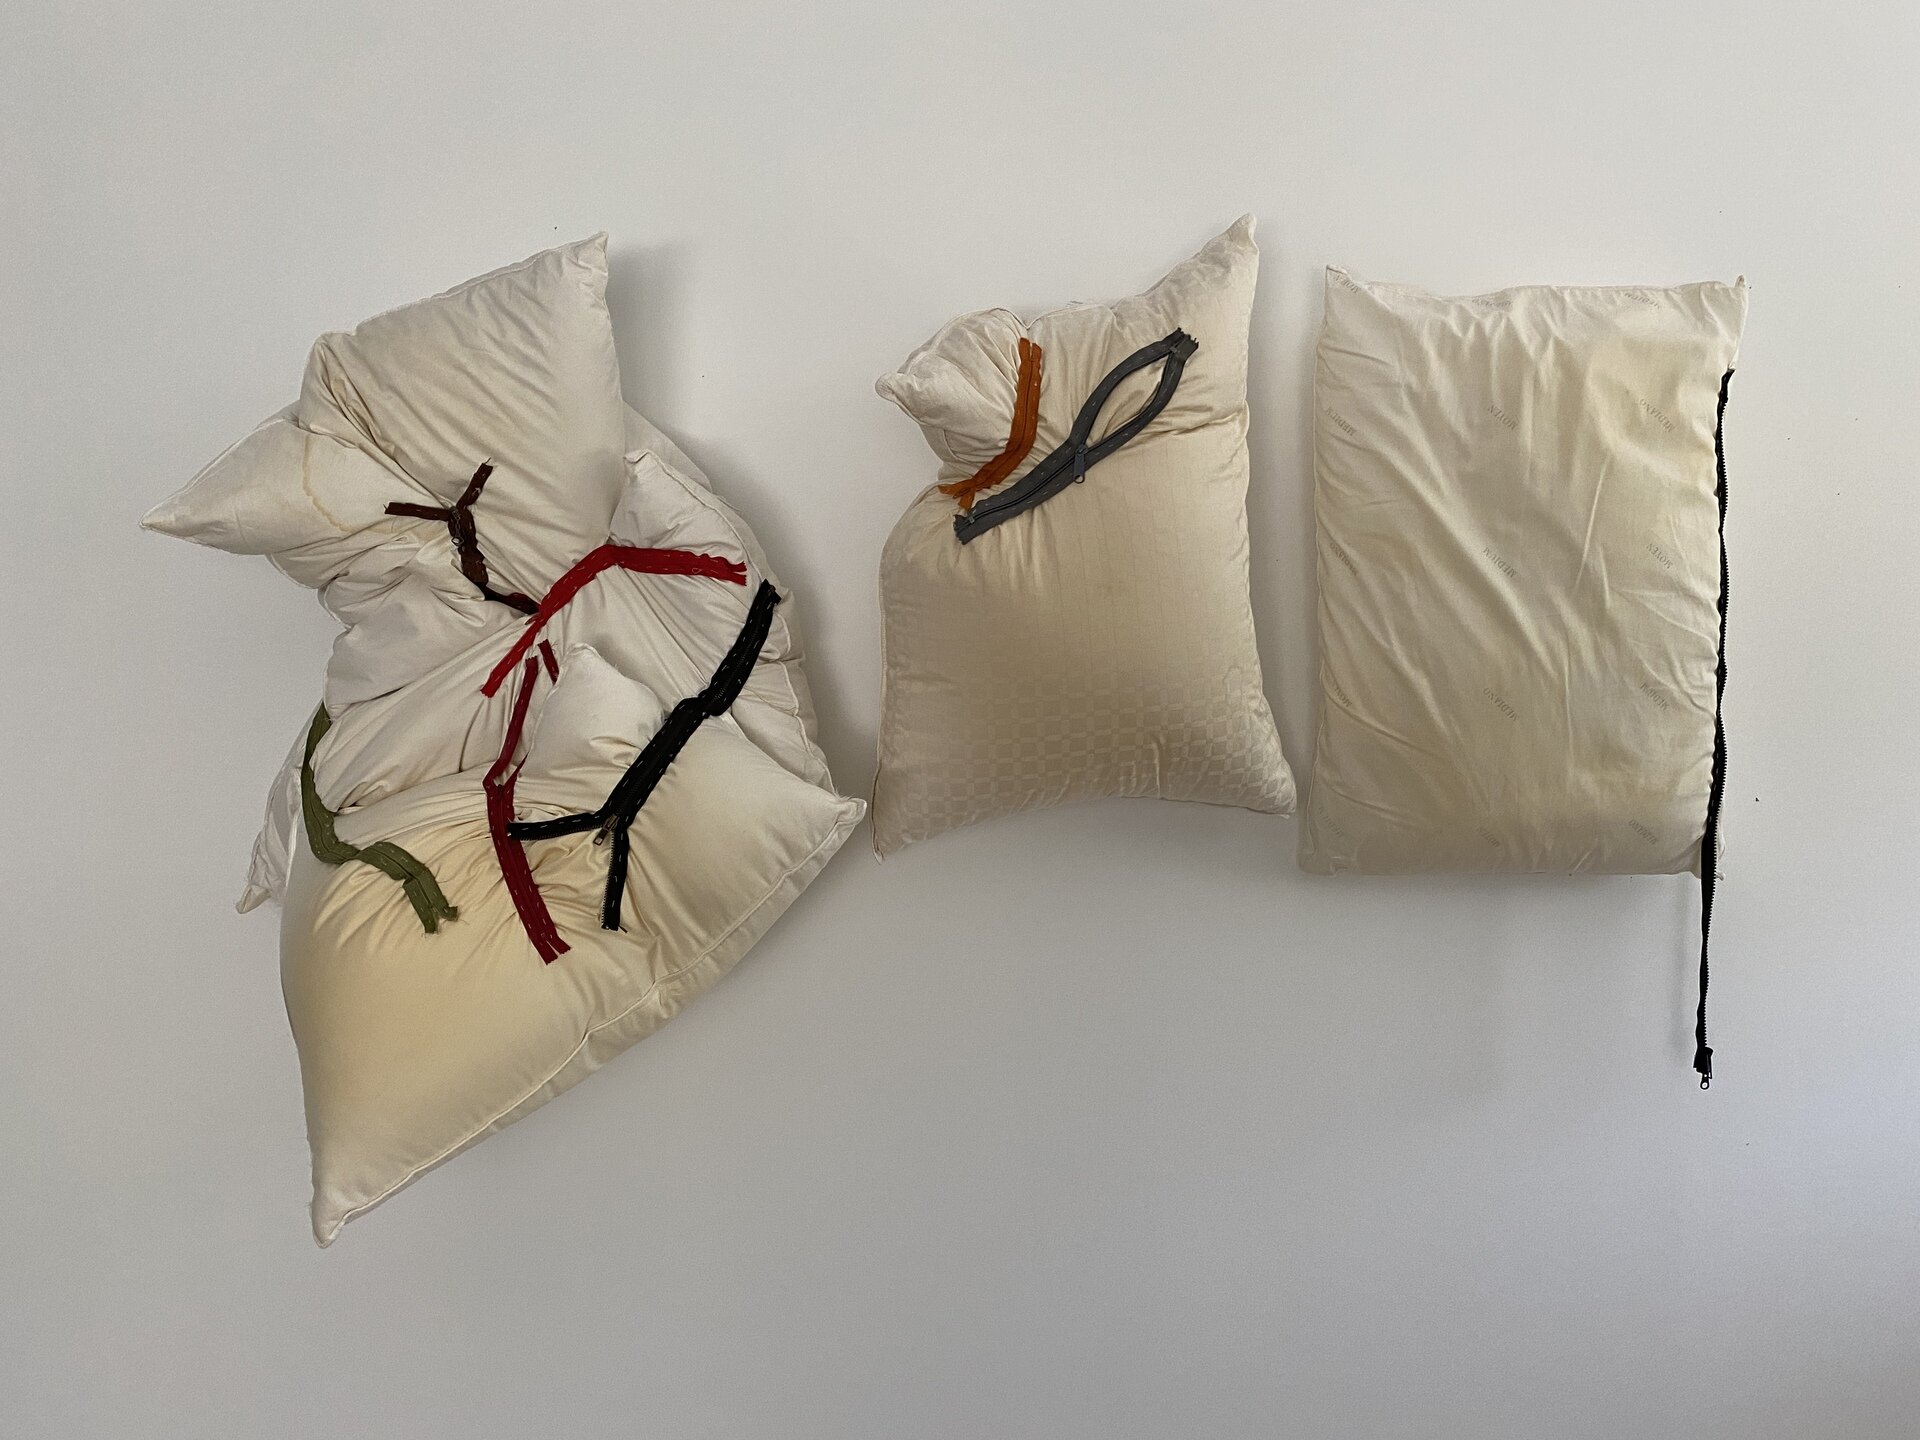   Carol Paik  “Configurations I” 31" x 60" x 10"; pillows, zippers, thread $1000. 